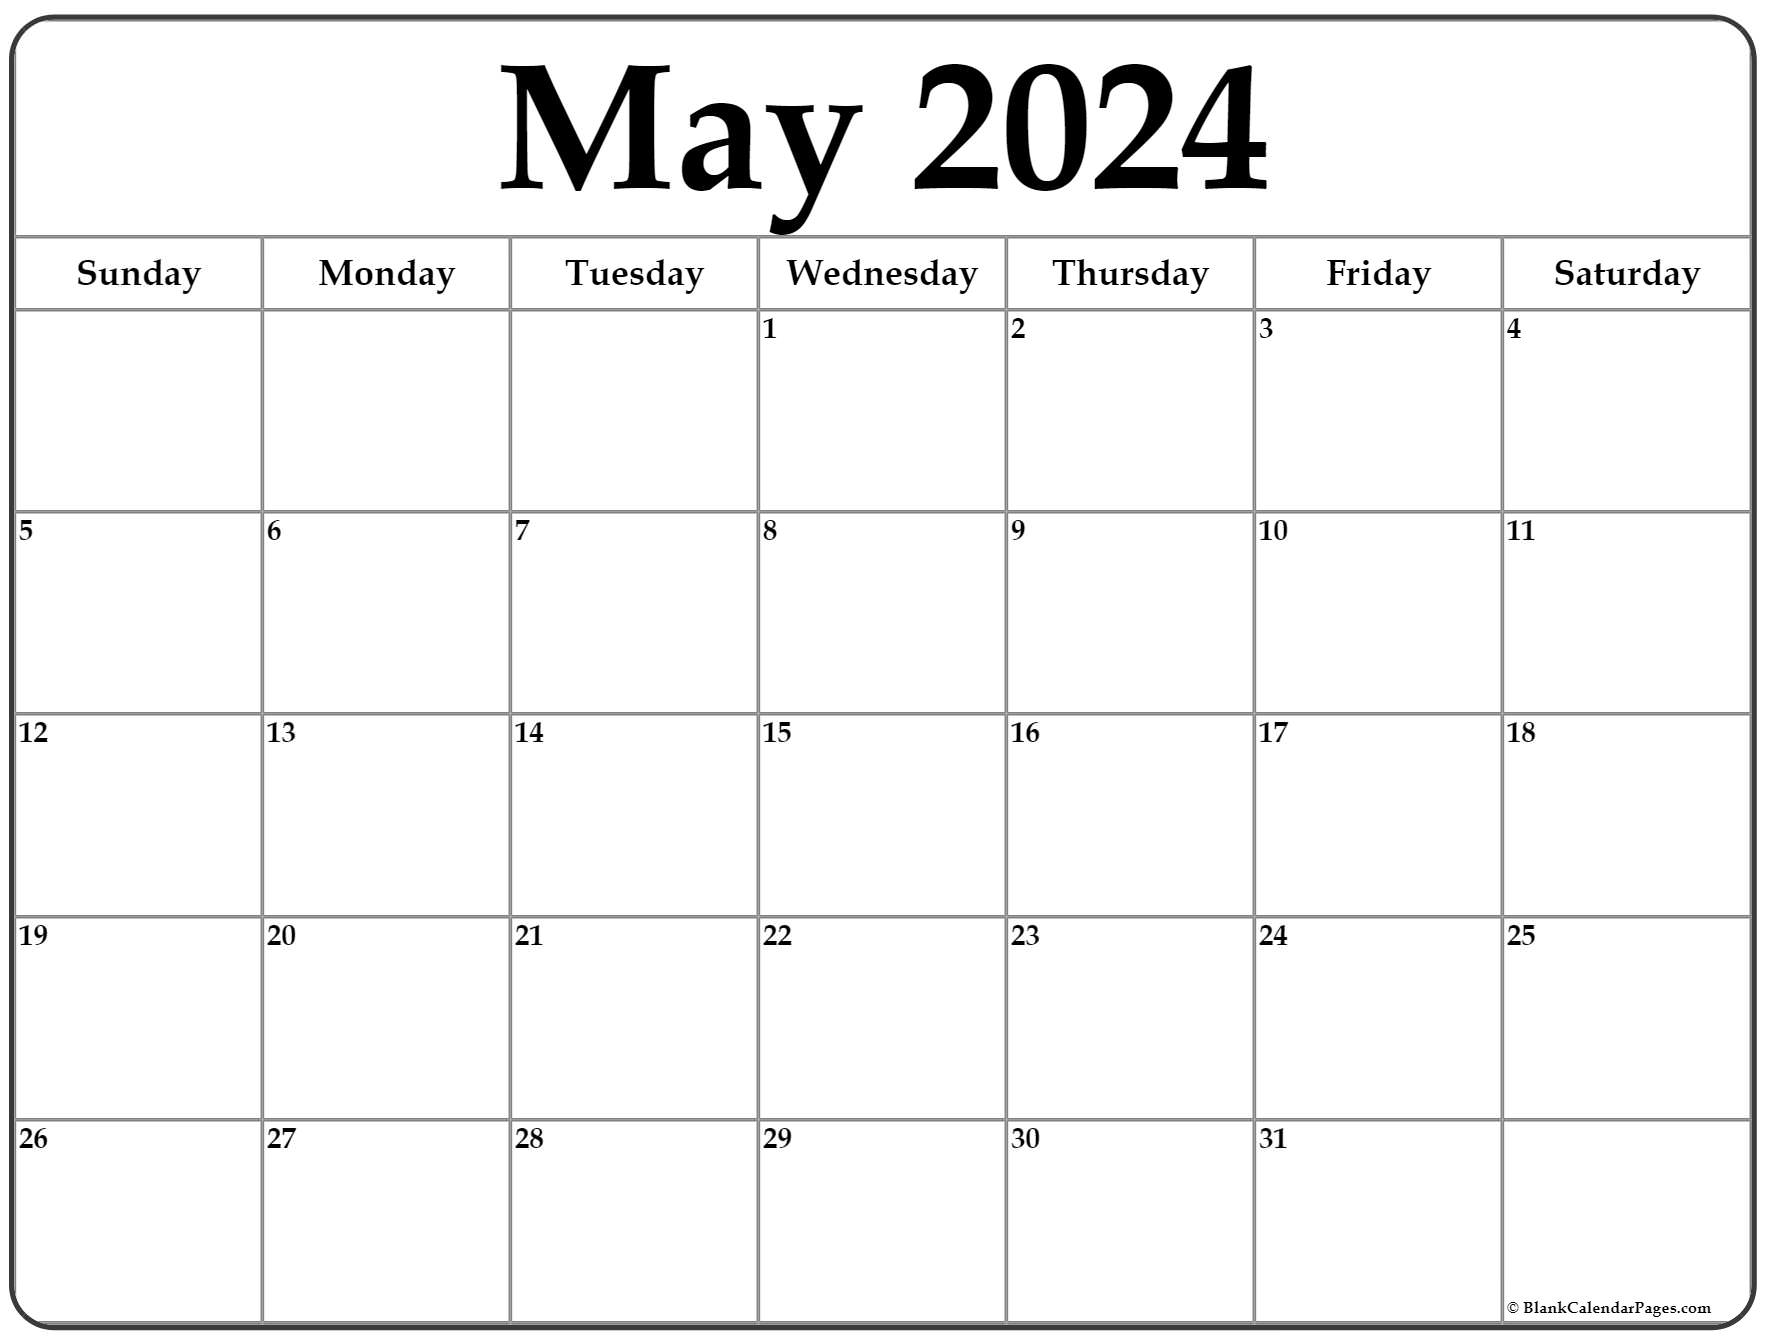 May 2022 Calendar With Holidays Printable May 2022 Calendar | Free Printable Calendar Templates